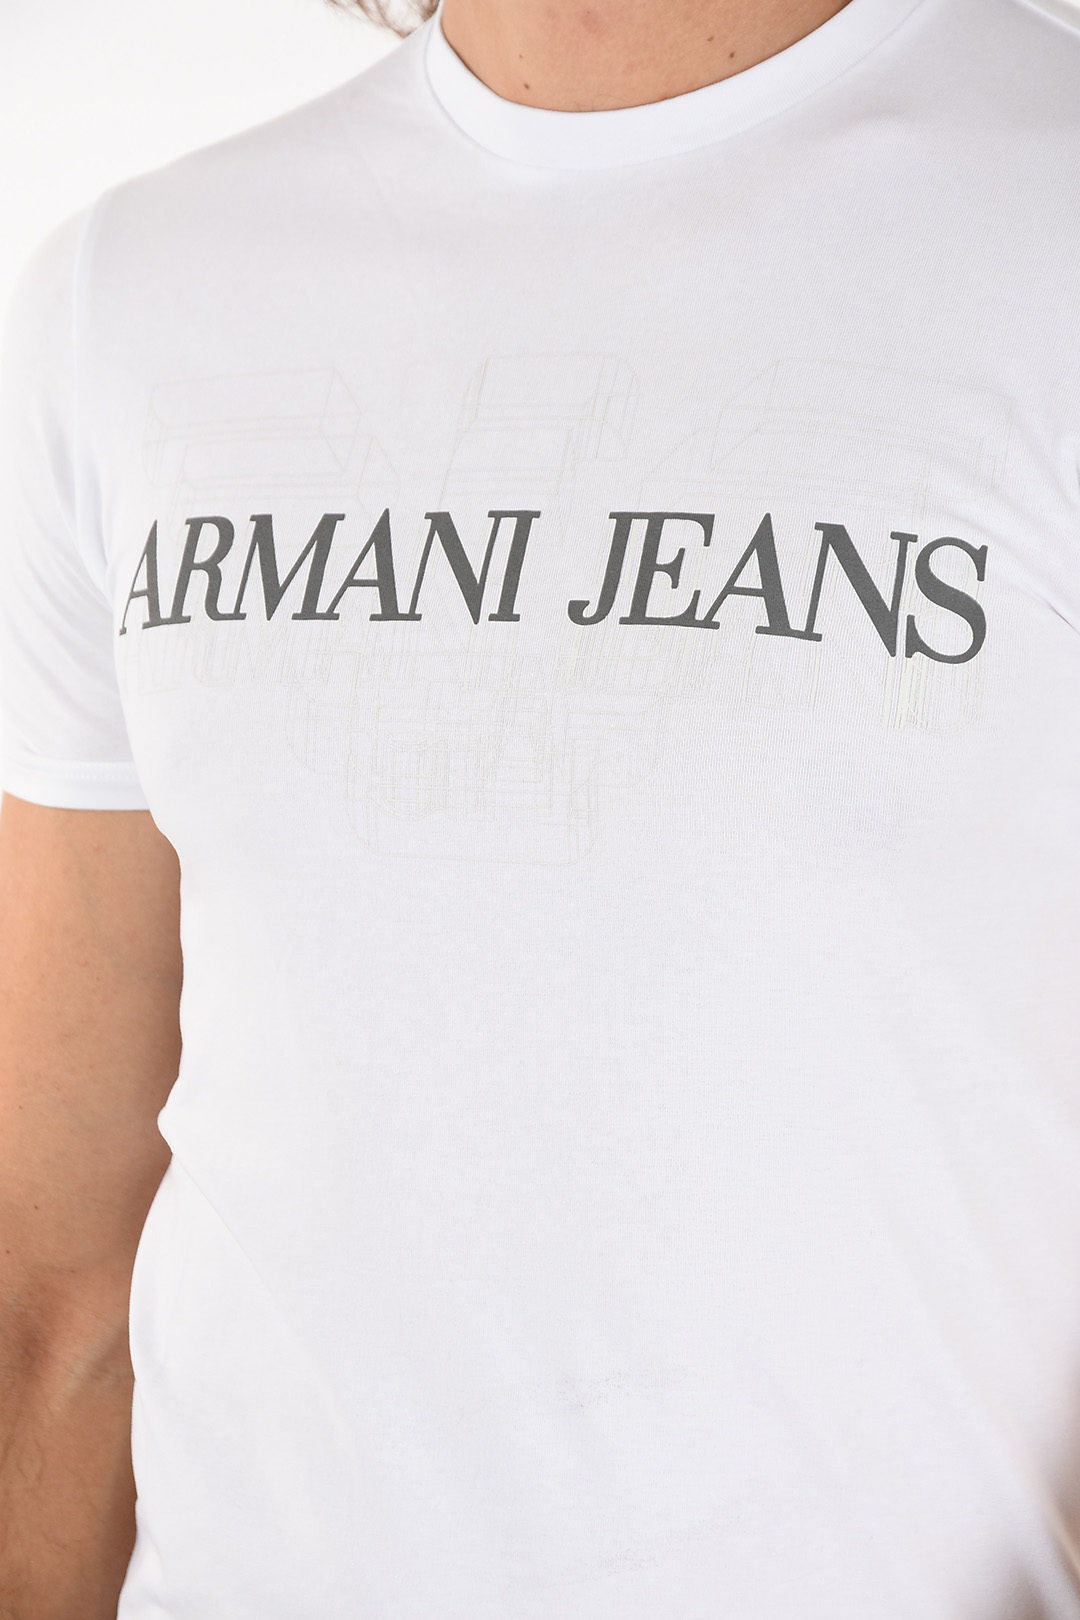 Top 72+ imagen mens armani jeans t shirt